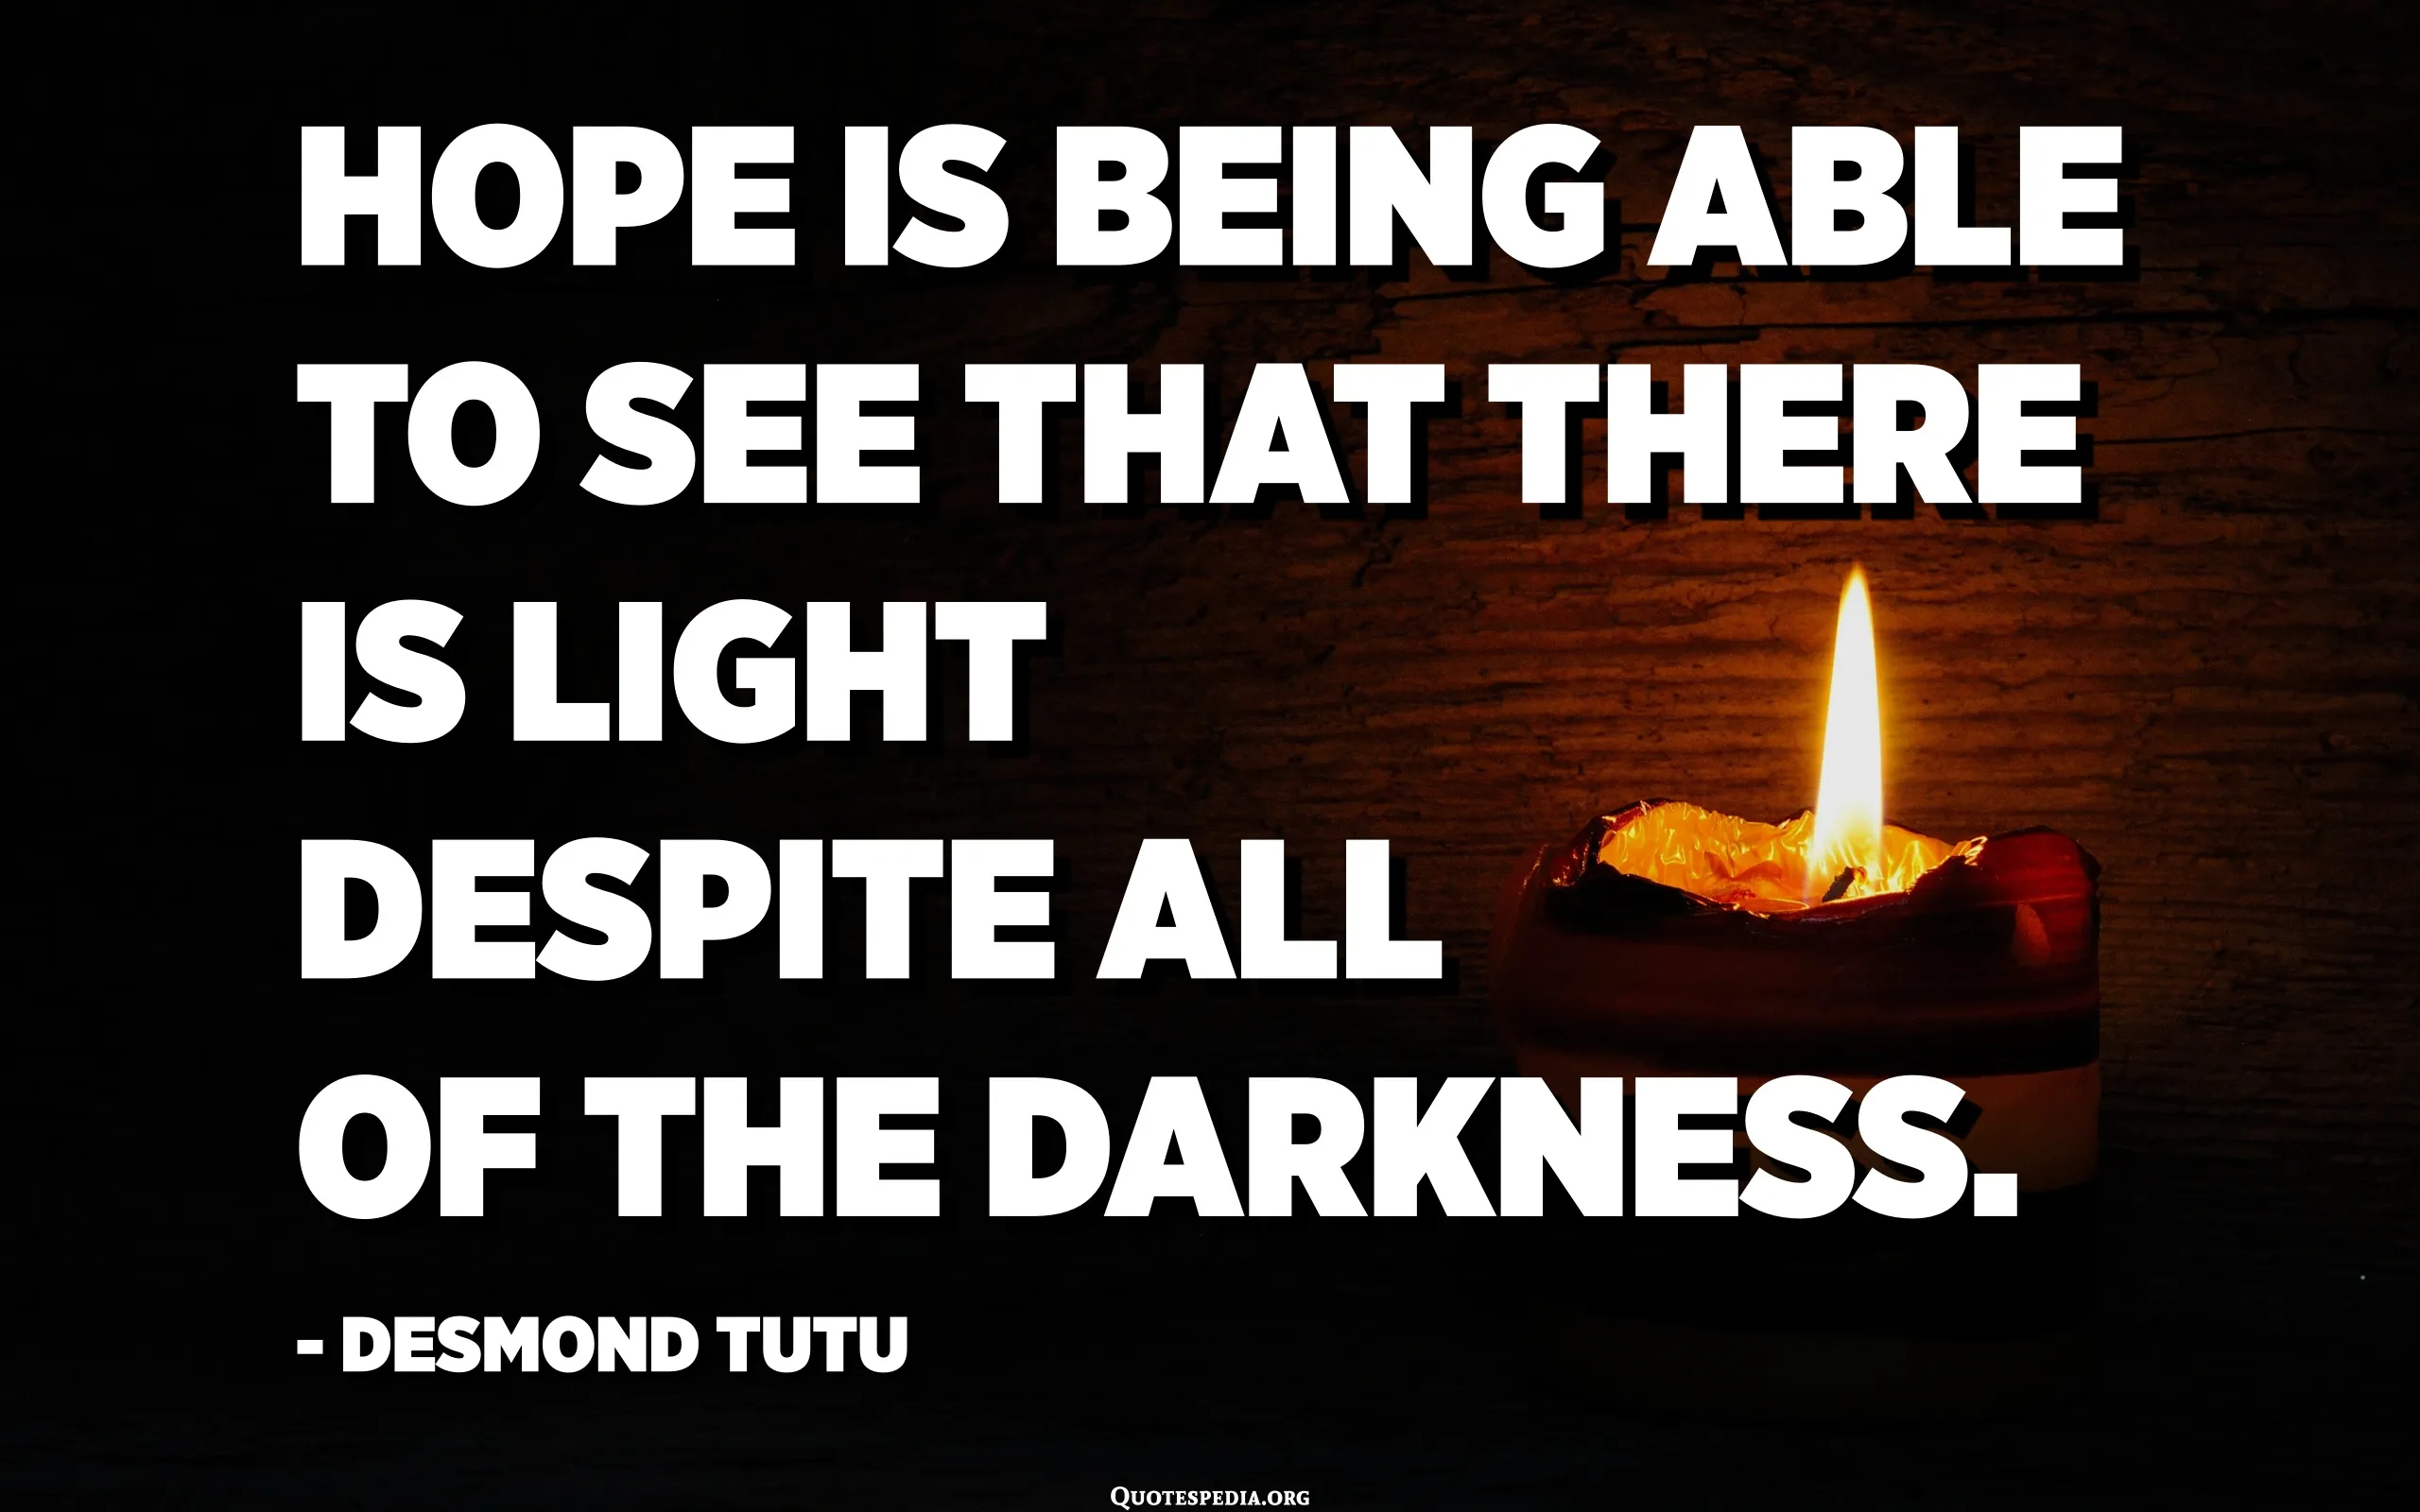 Hope blog post: Desmond Tutu meme